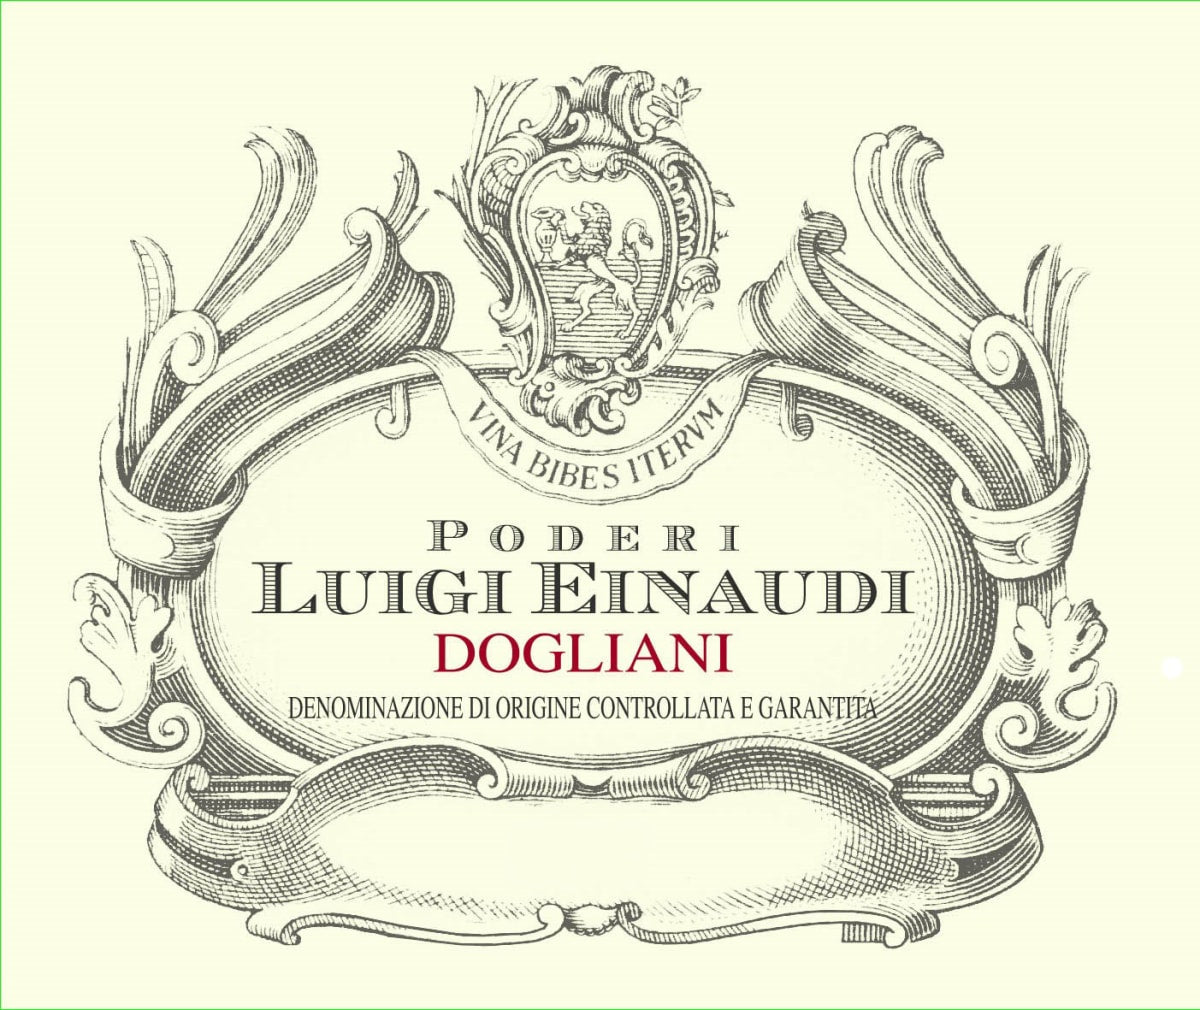 Luigi Einaudi Dogliani DOCG